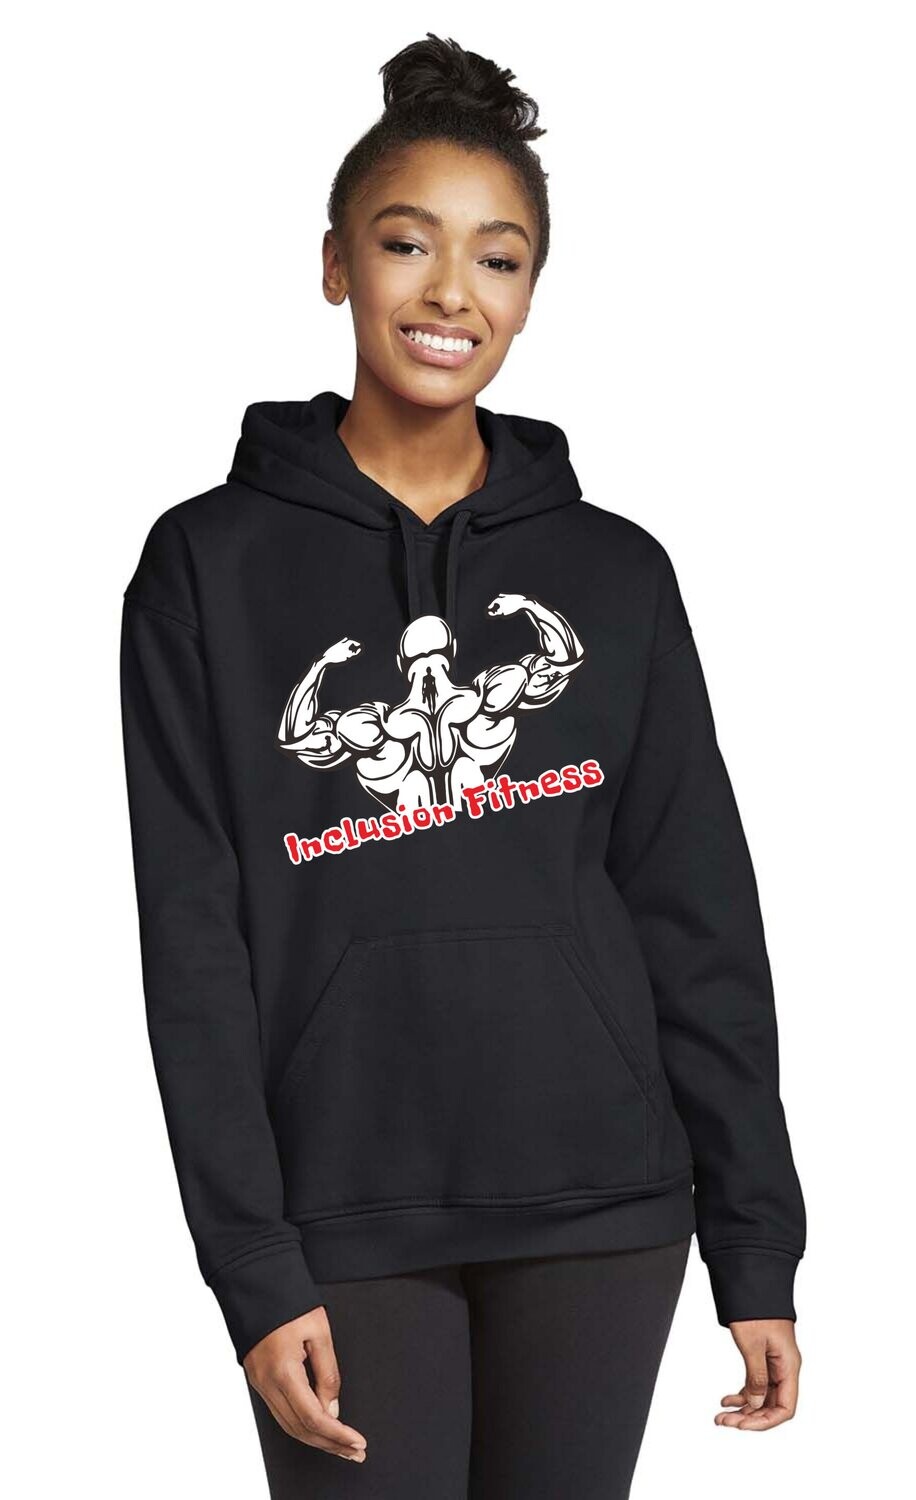 Inclusion Fitness Logo Unisex Hoodie Sweatshirt (adult & youth)